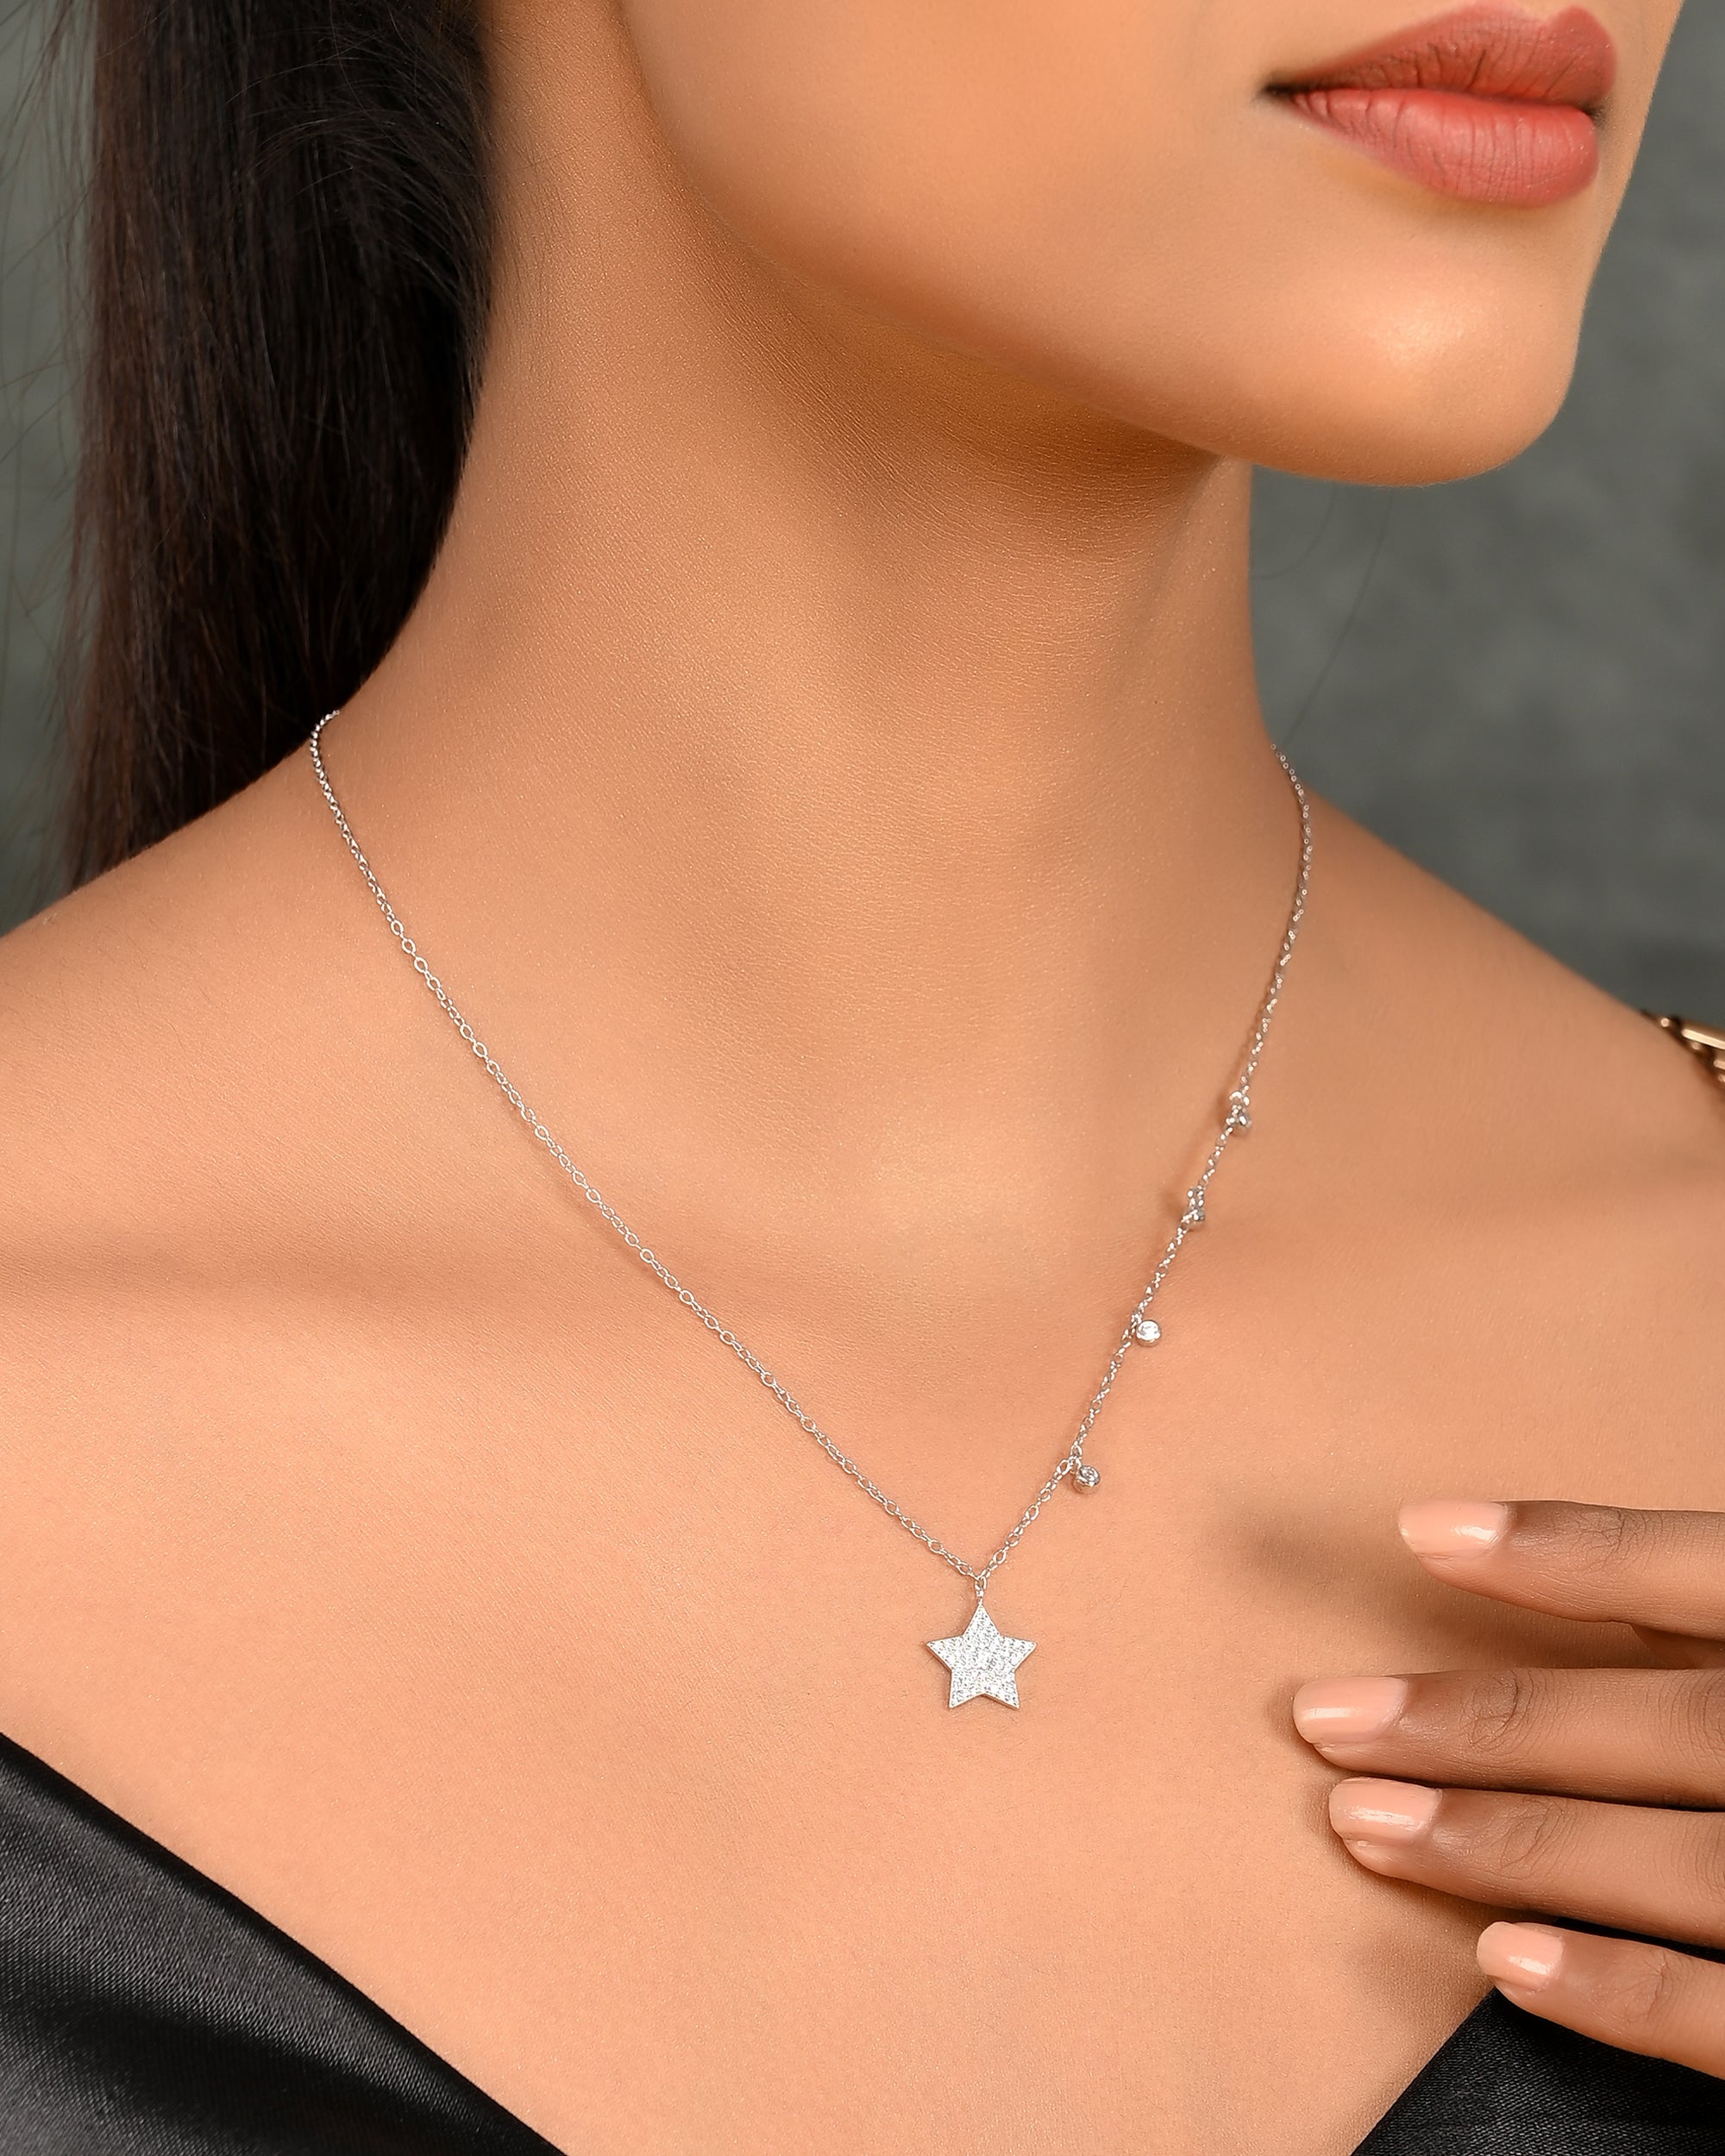 Diamond Star Necklace - Moondance Jewelry Gallery